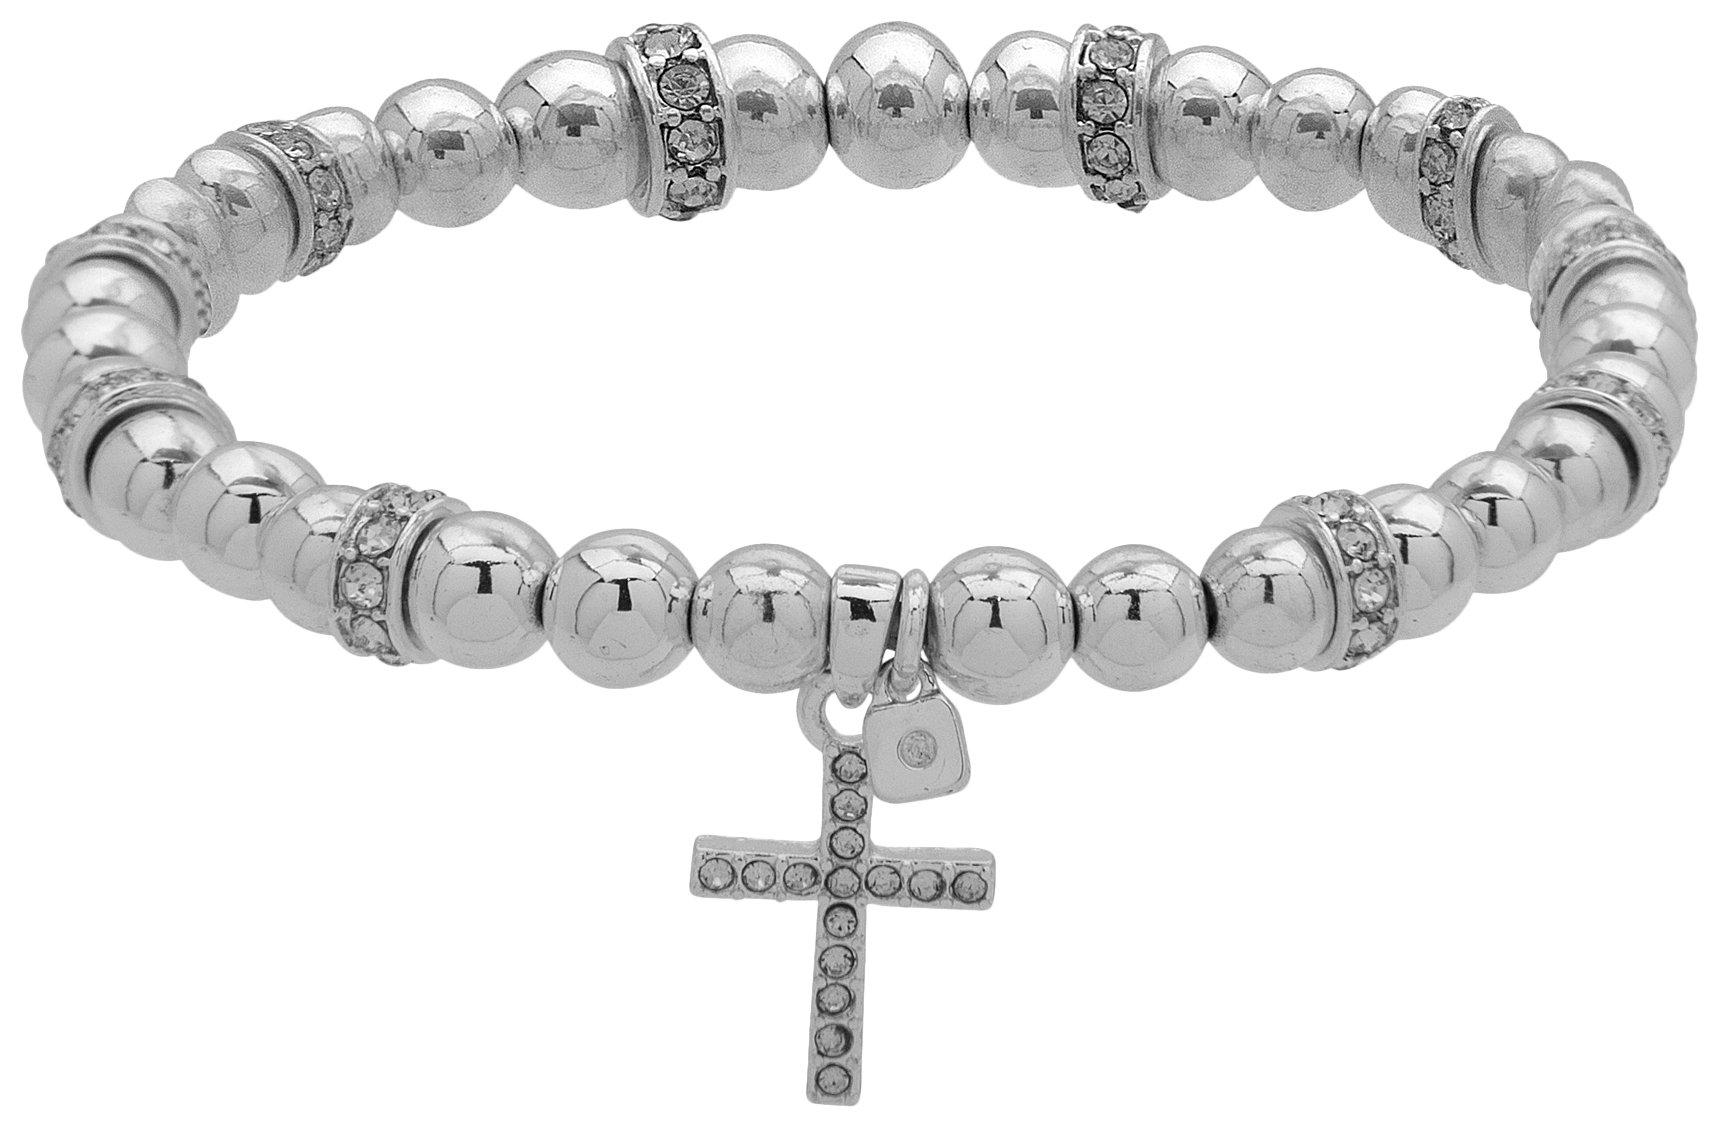 Nine West Pave Cross Bead Stretch Bracelet